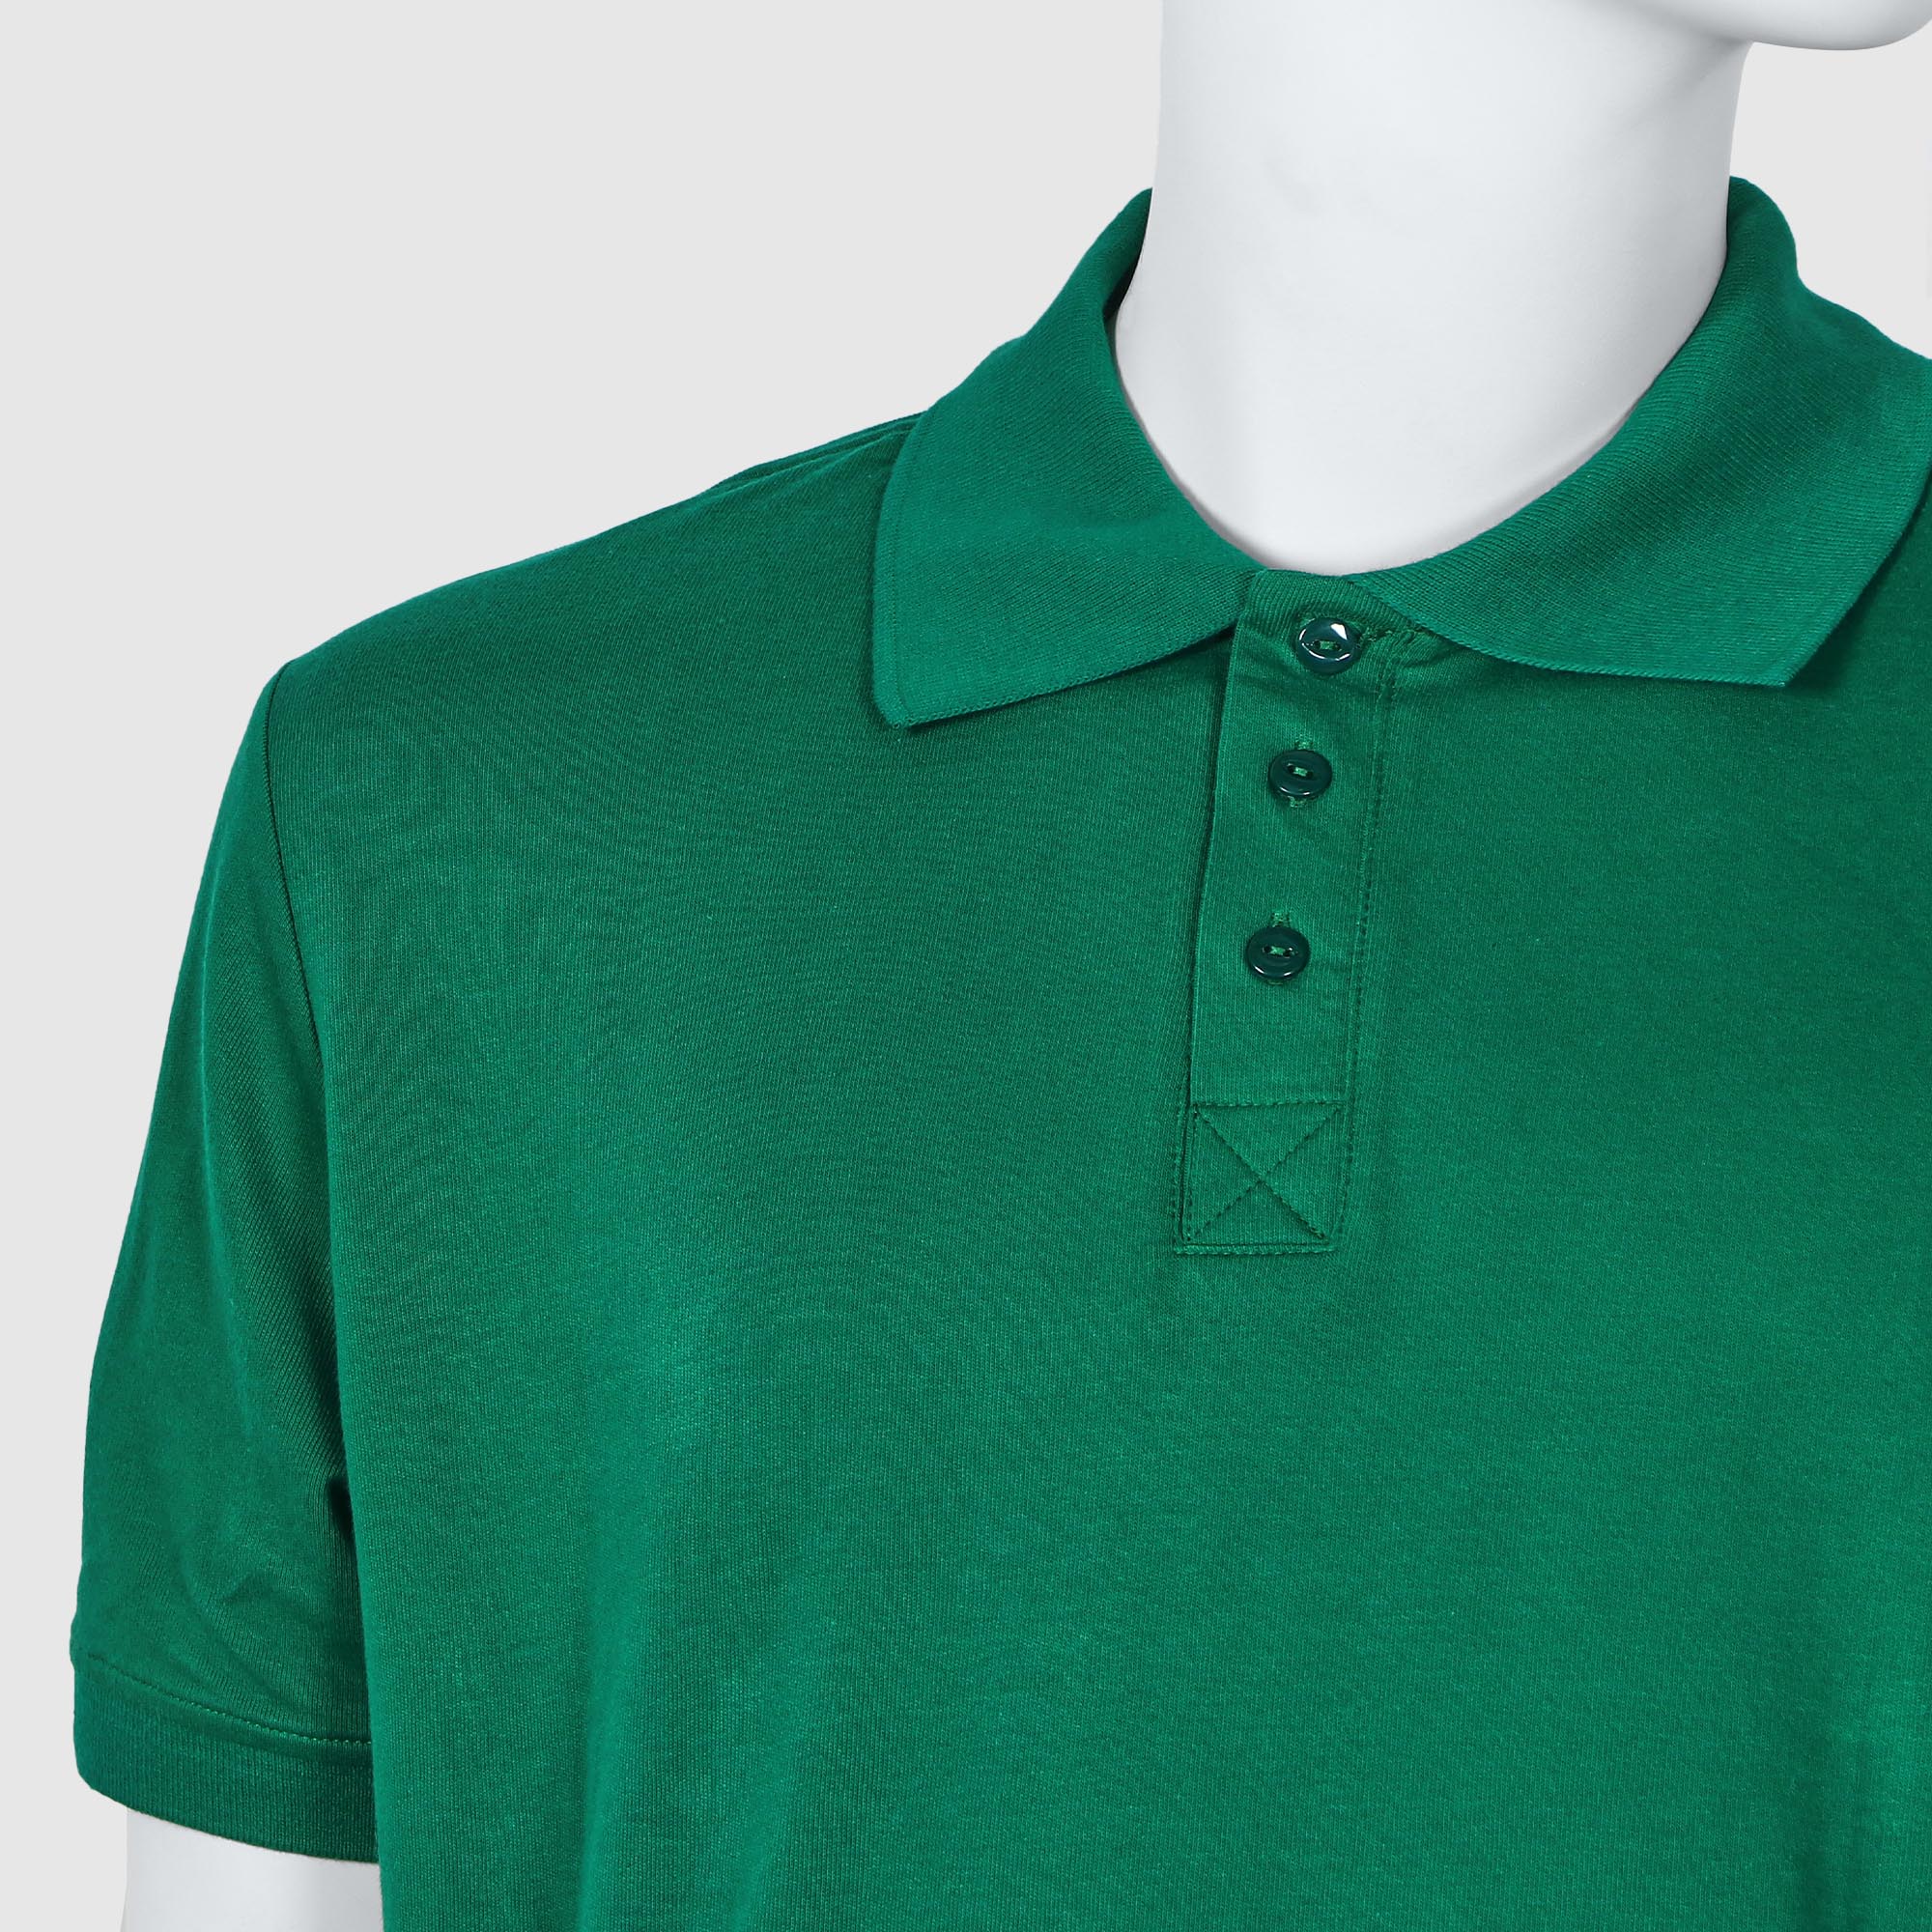 Мужская футболка-поло Diva Teks зелёная (DTD-09), цвет зелёный, размер 50-52 - фото 3